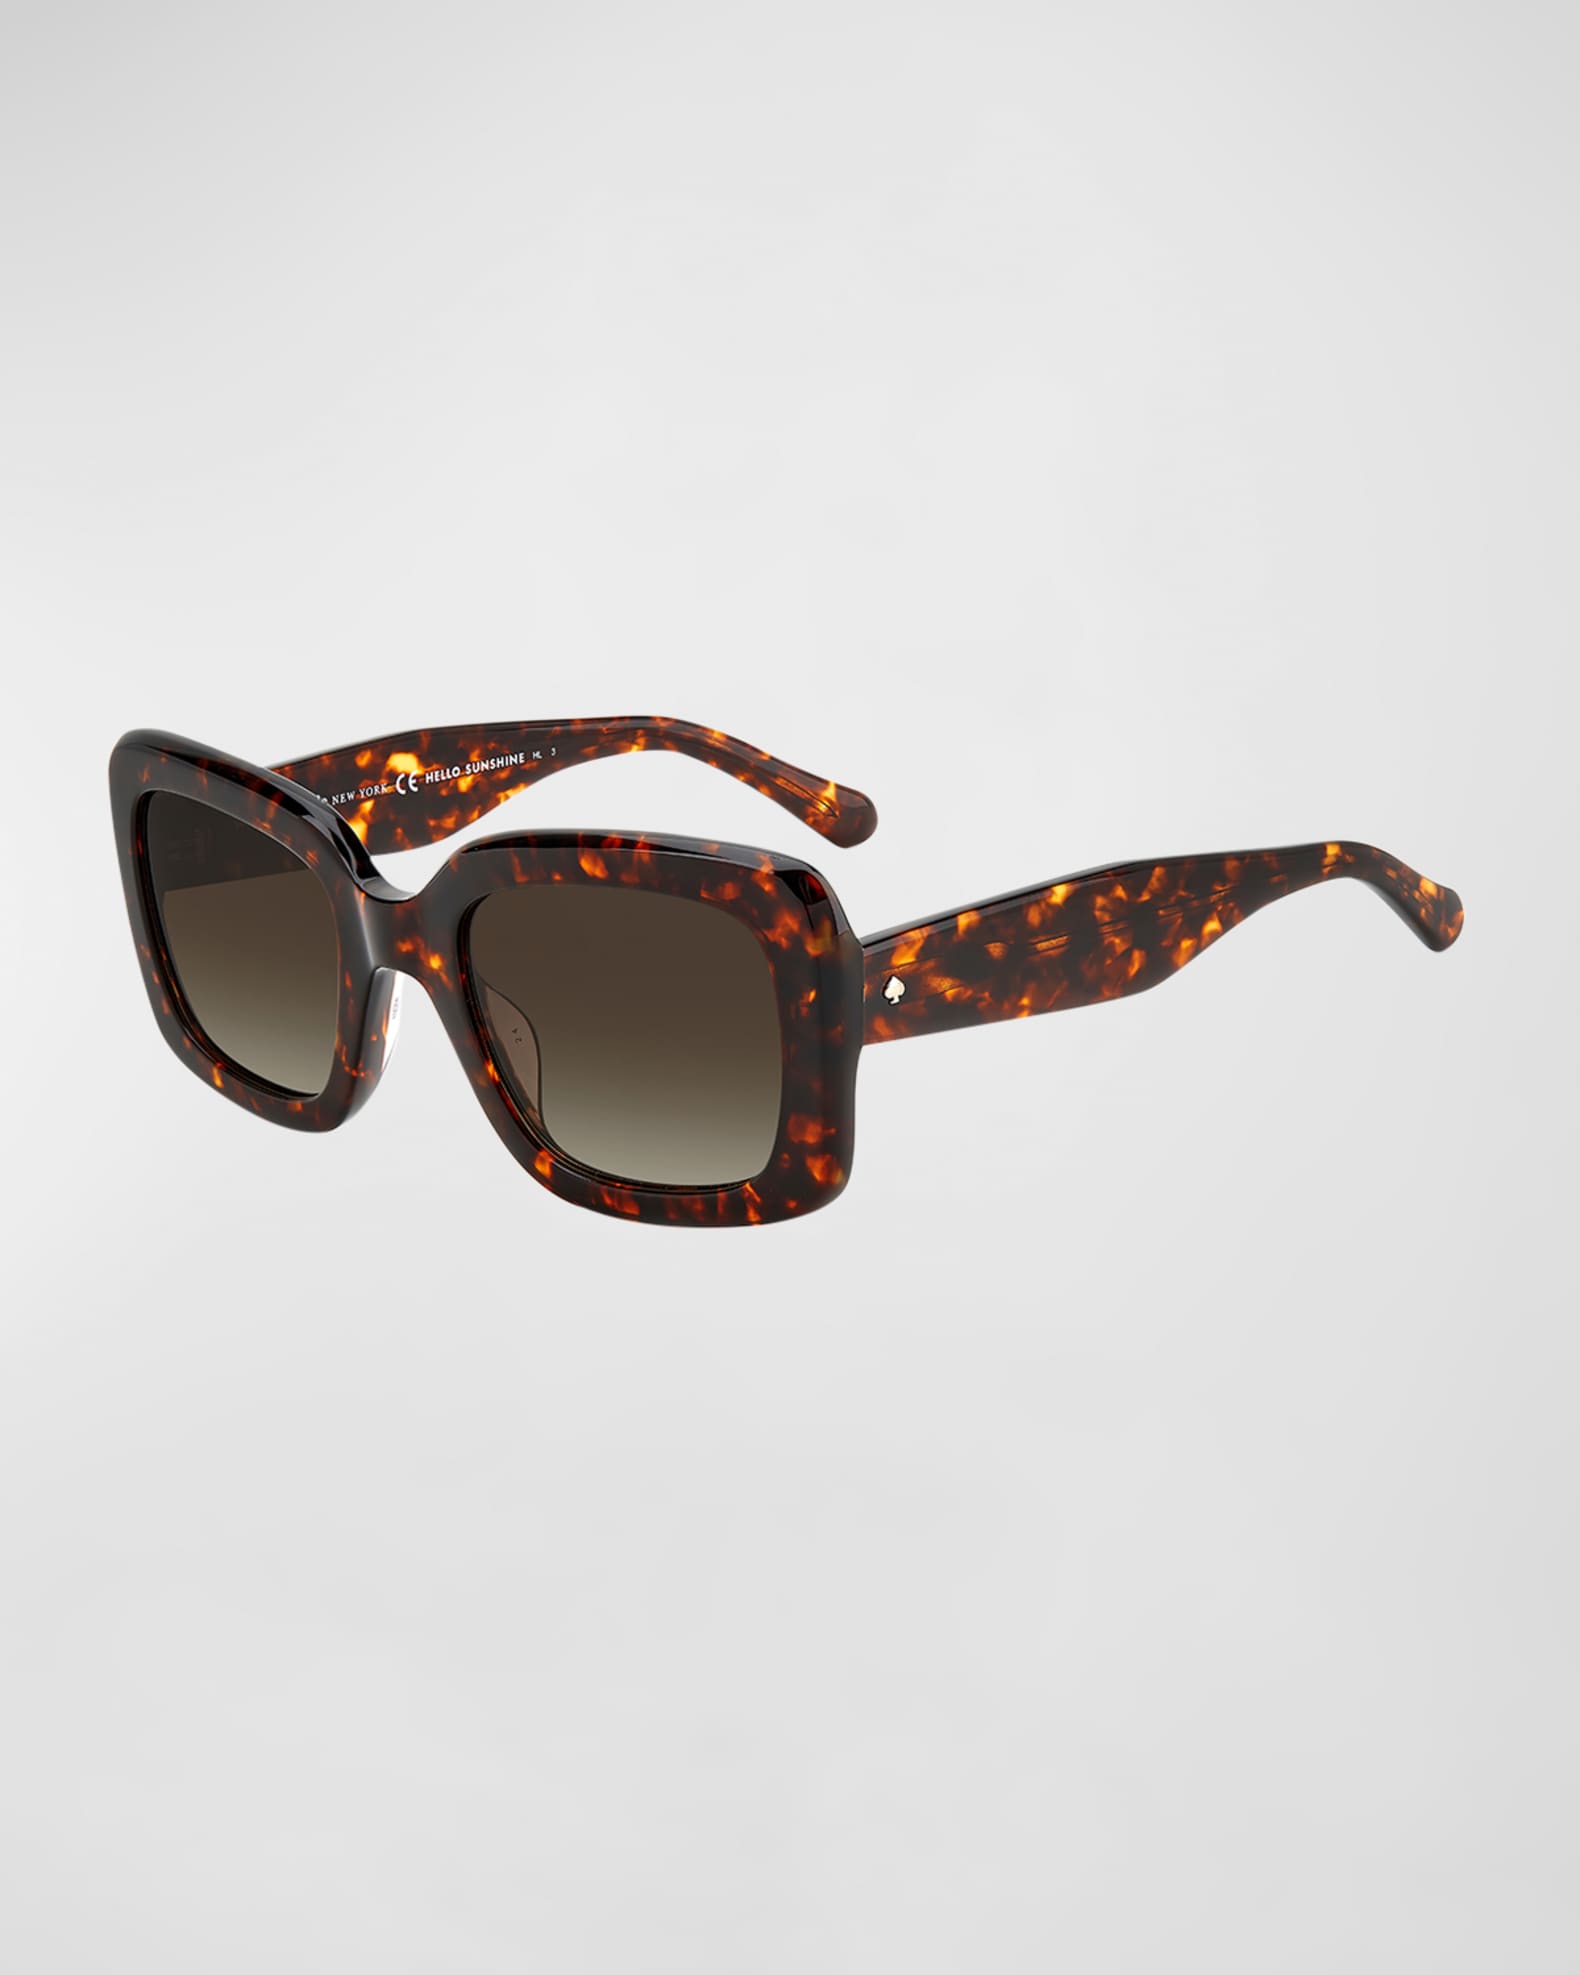 Kate Spade BELLAMY/S Sunglasses